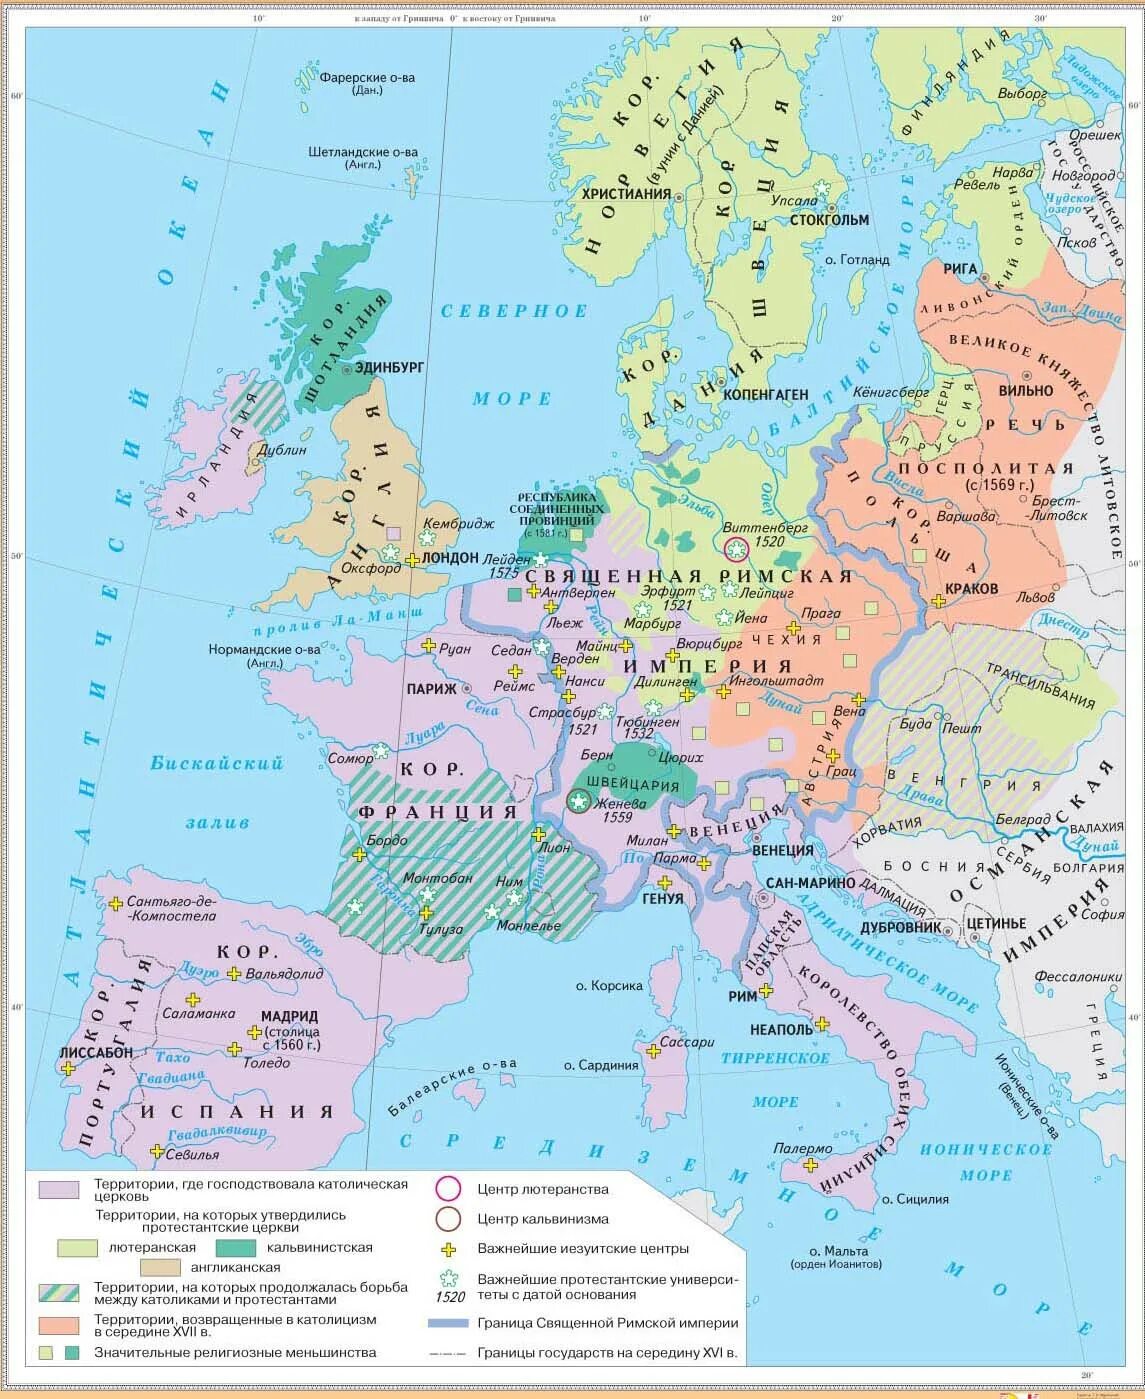 Реформация и контрреформация в Европе карта. Реформация в Европе 16 век карта. Карта Реформации в Европе в 16.